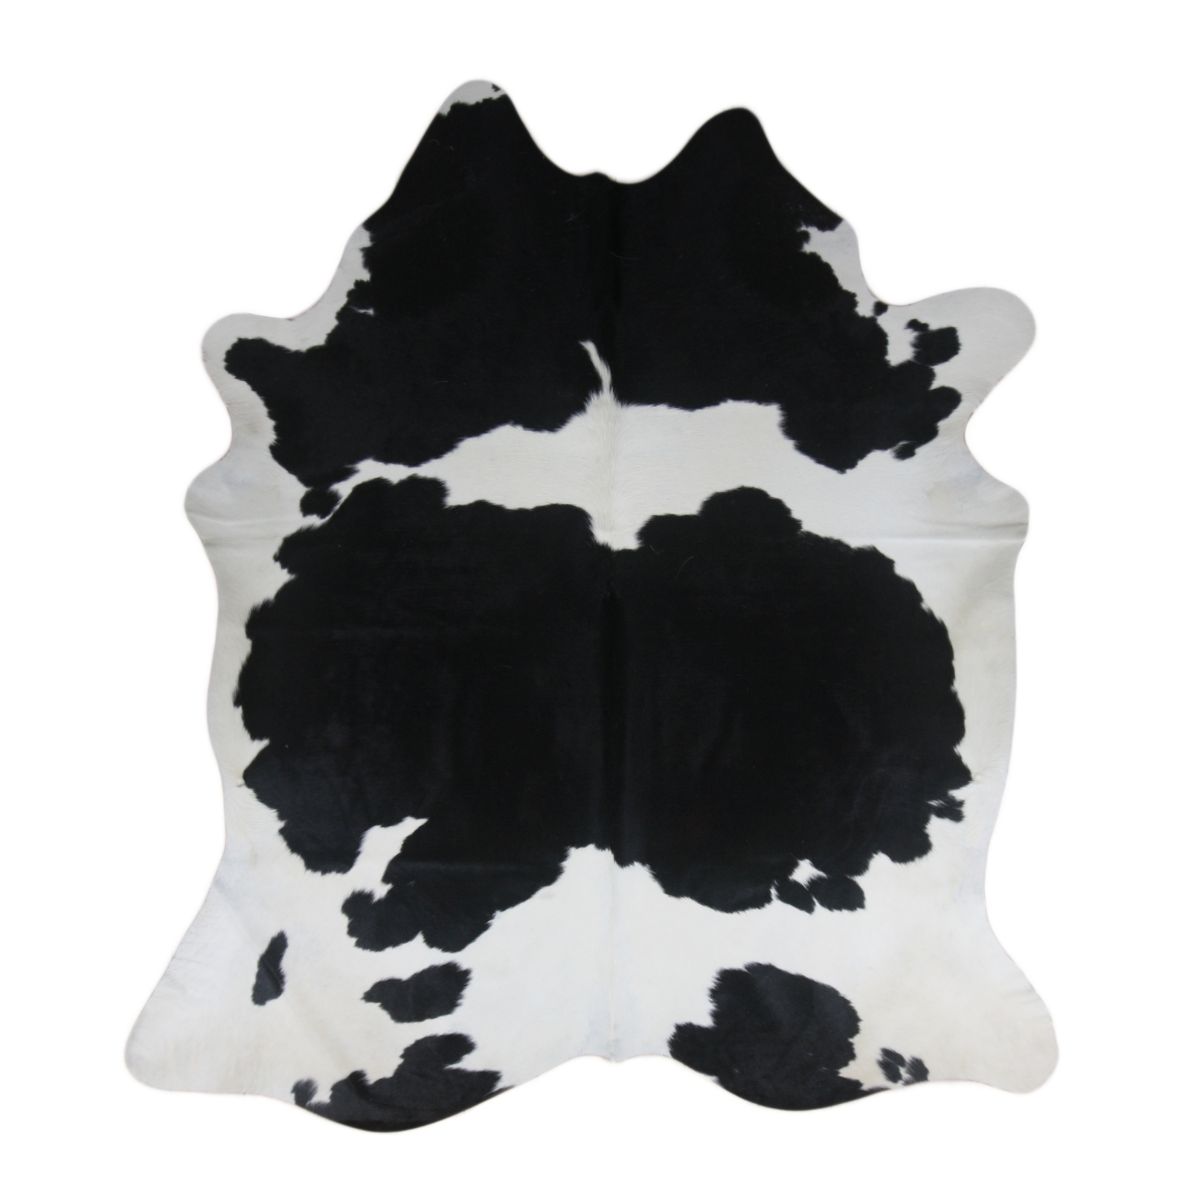 Decoratiuni de interior - Piele naturala de vita, 2-3 m2, culoare negru cu alb, hectarul.ro